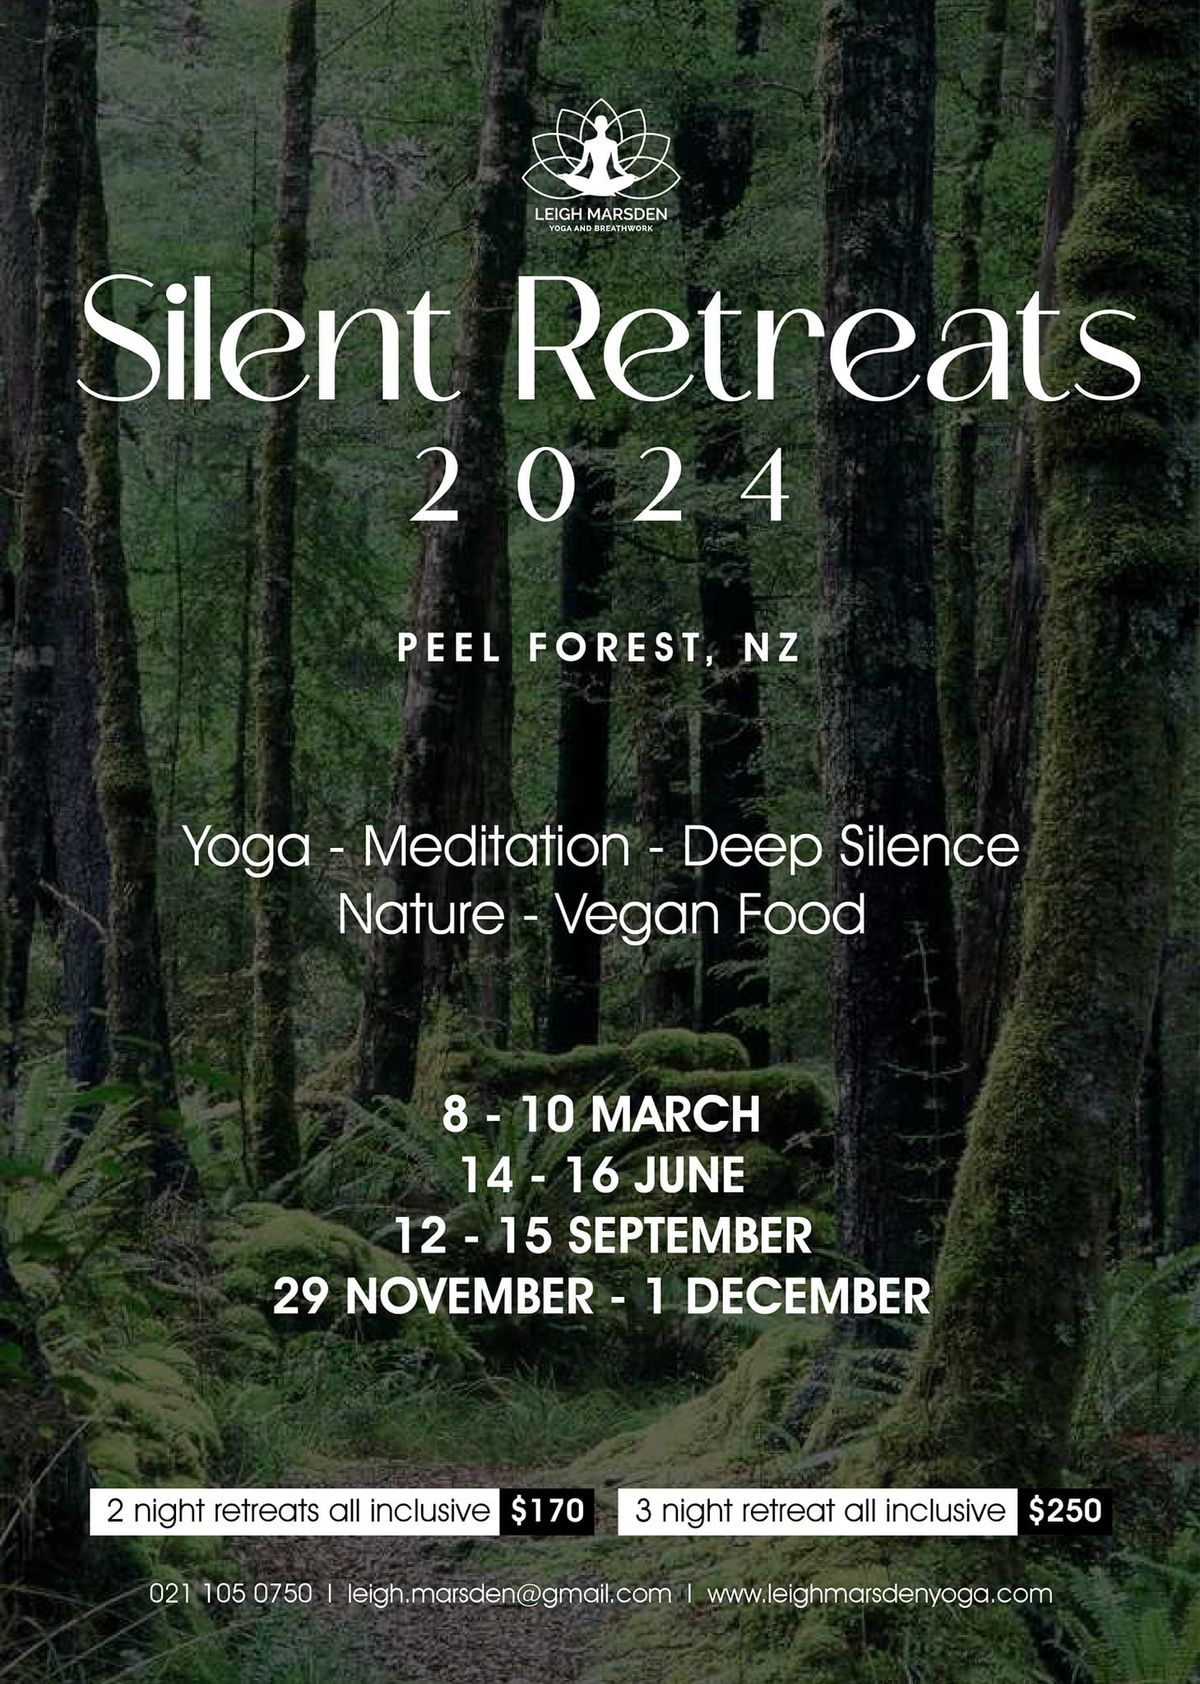 Silent Retreat - Peel Forest 